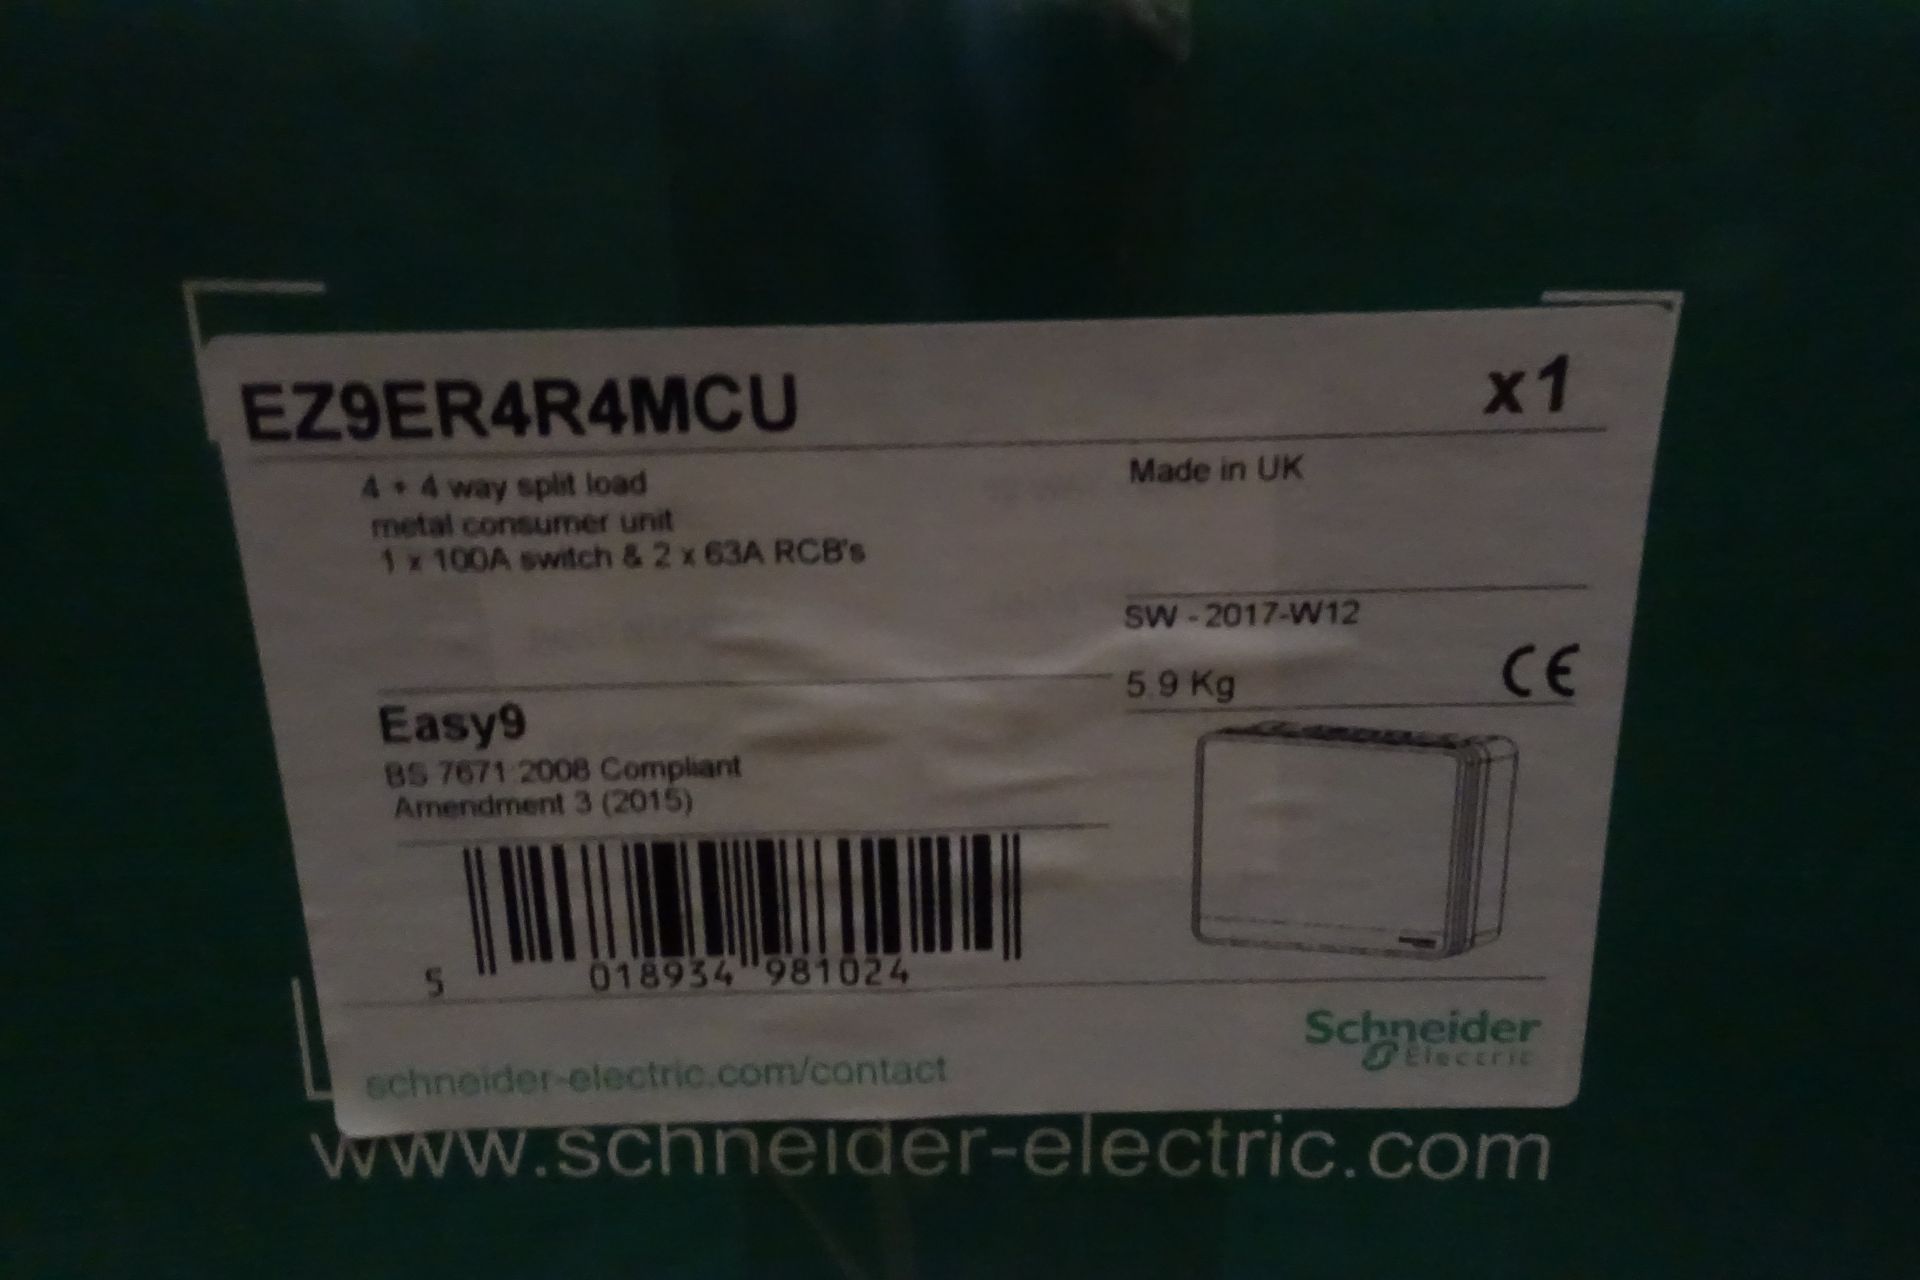 4 x SCHNEIDER EZ9ER4R4MCU 4 + 4 Way Split Load Metal Consumer Units C/W 100A Switch + 2 x 63A RCB's